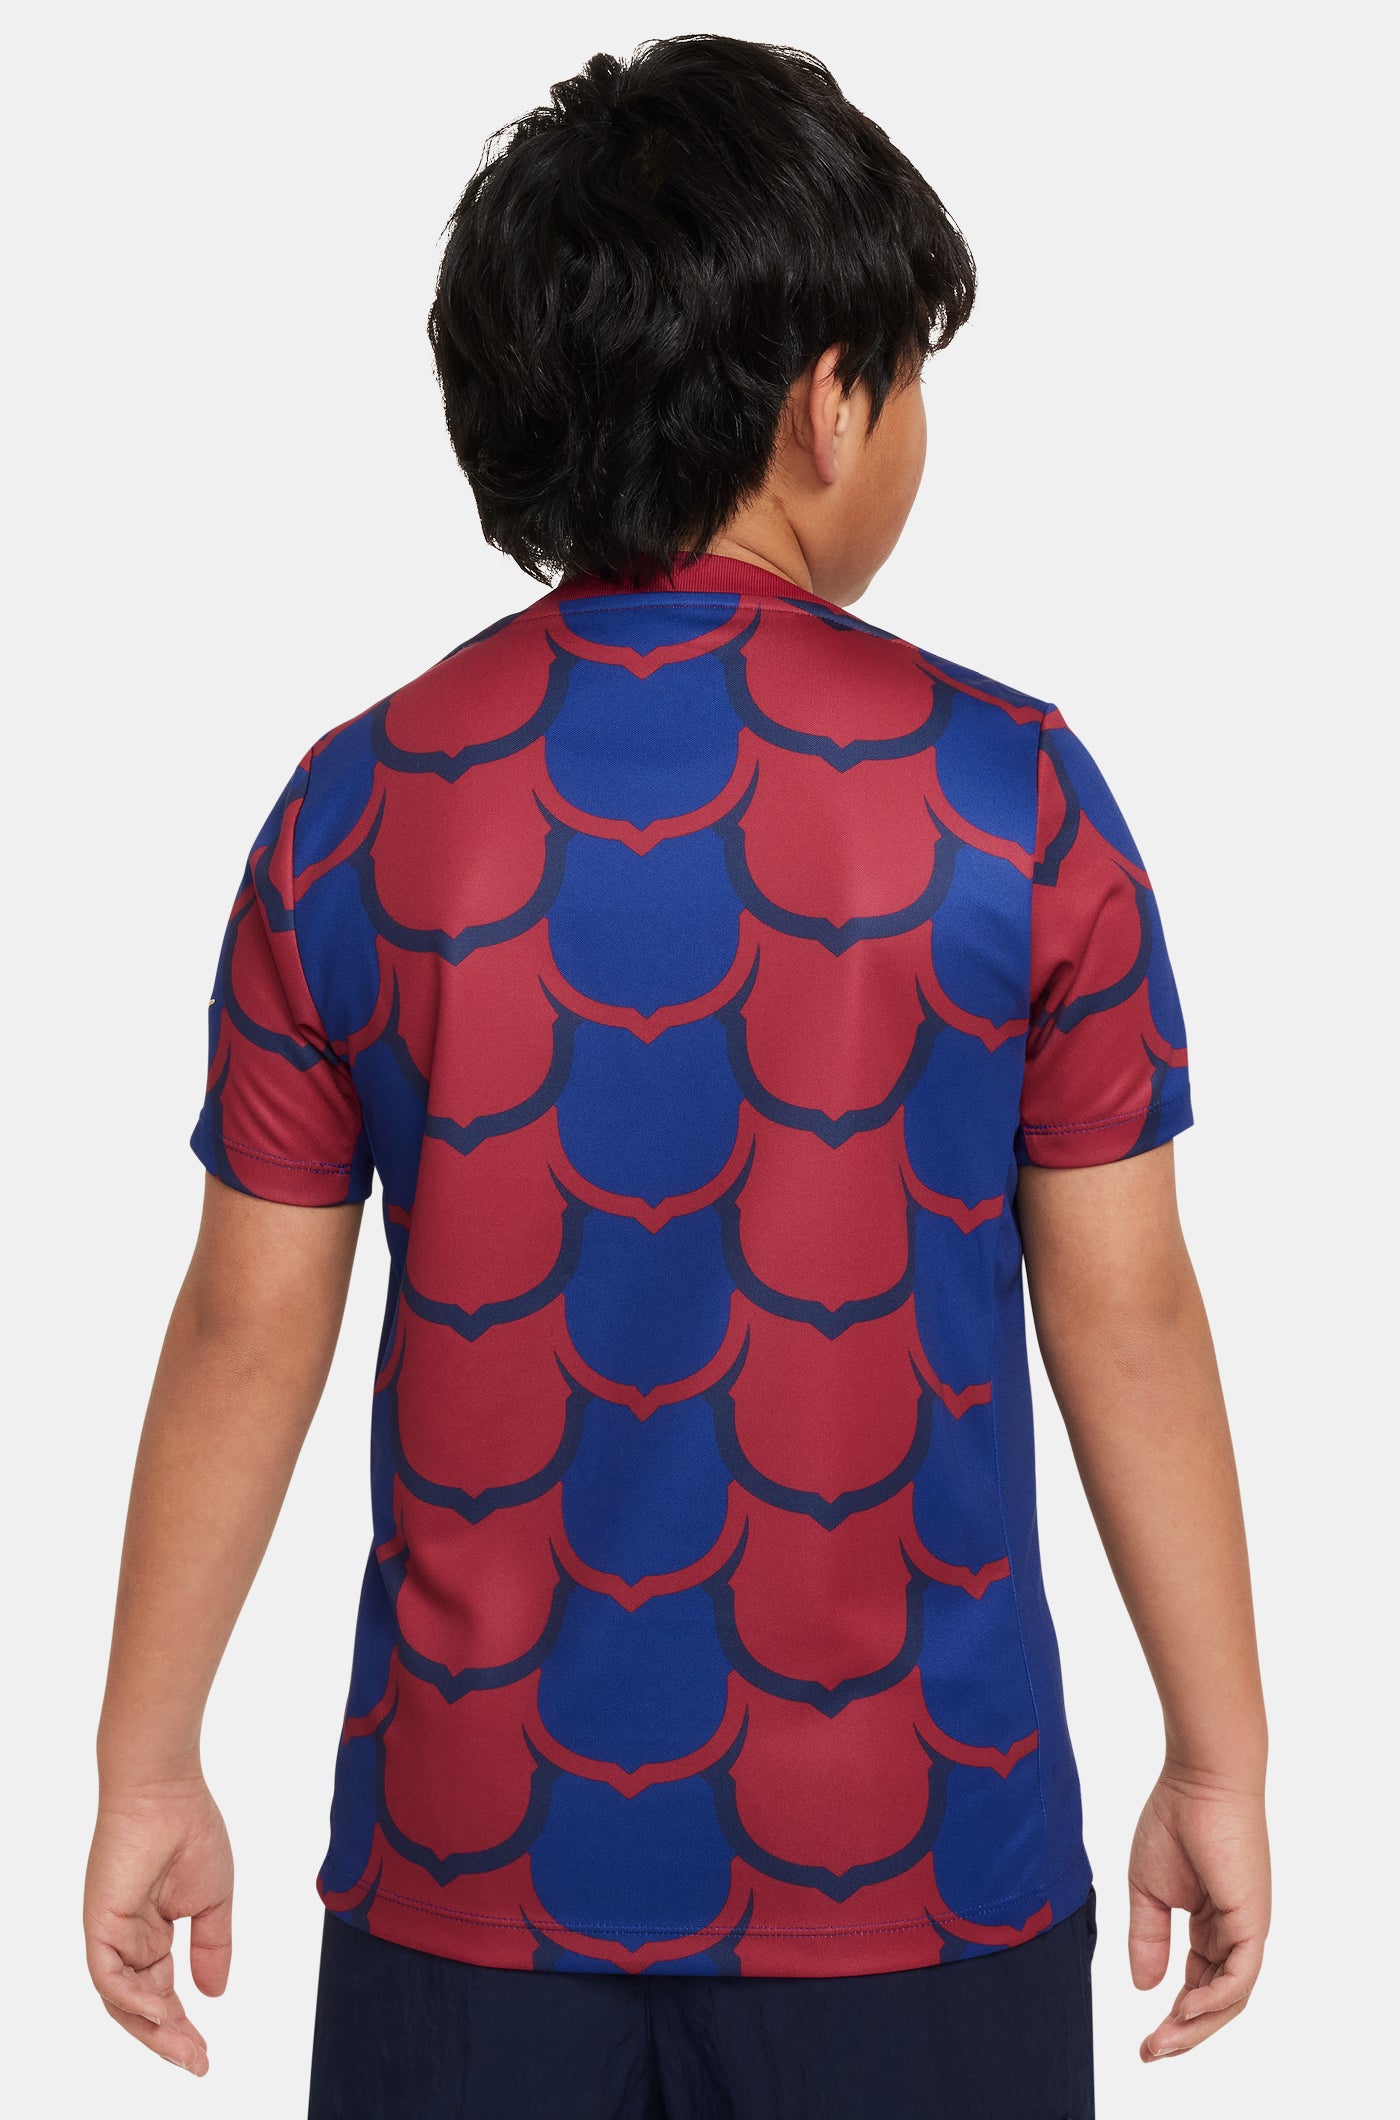 FC Barcelona blaugrana Pre-Match Shirt - Junior – Barça Official Store ...